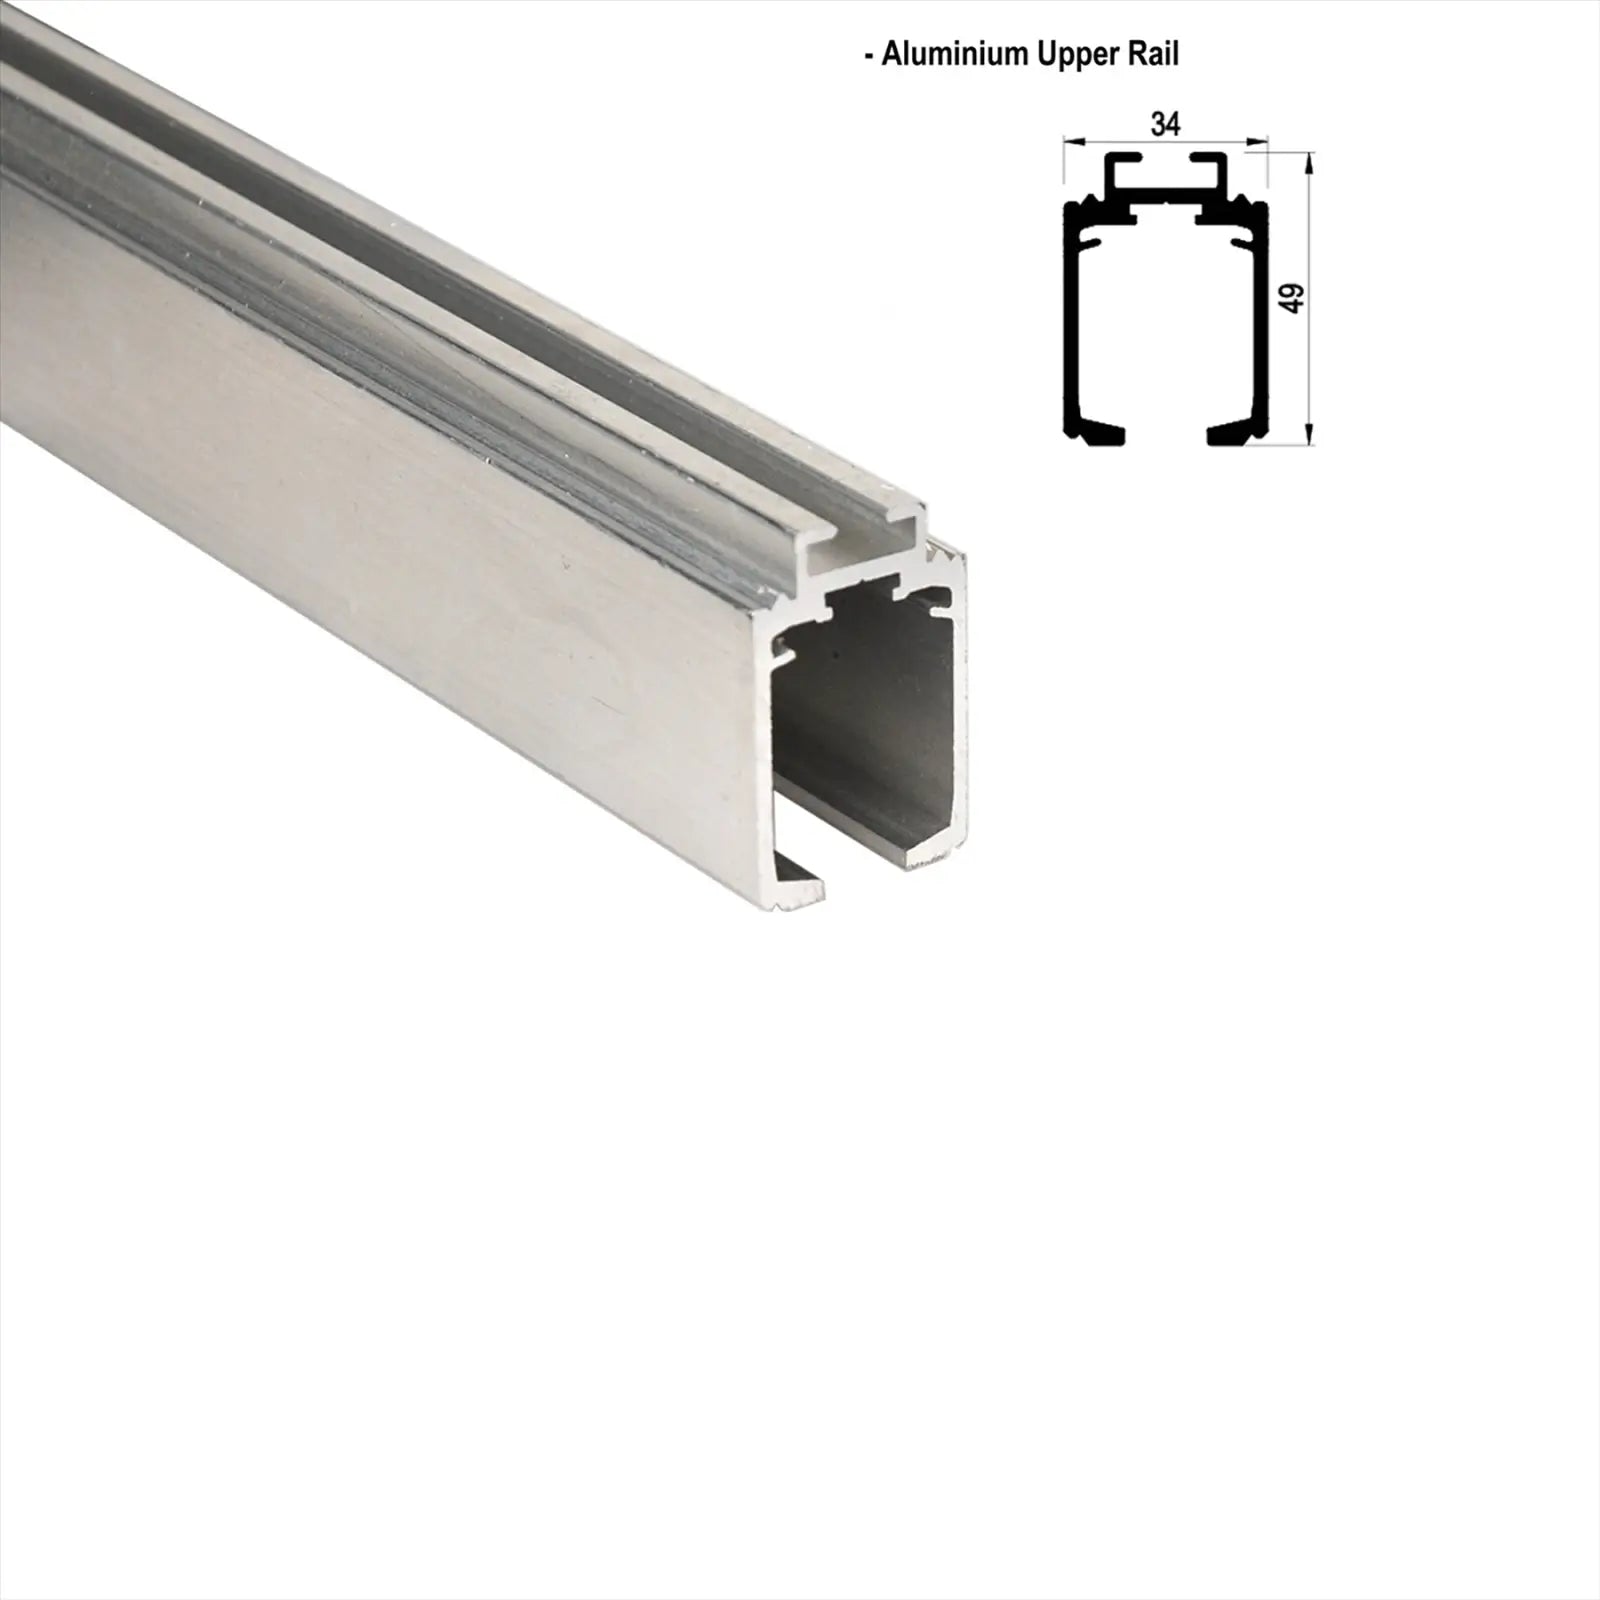 G-Slide Top Hung Glass Internal Sliding Door Kit - 1500mm Track - Decor And Decor